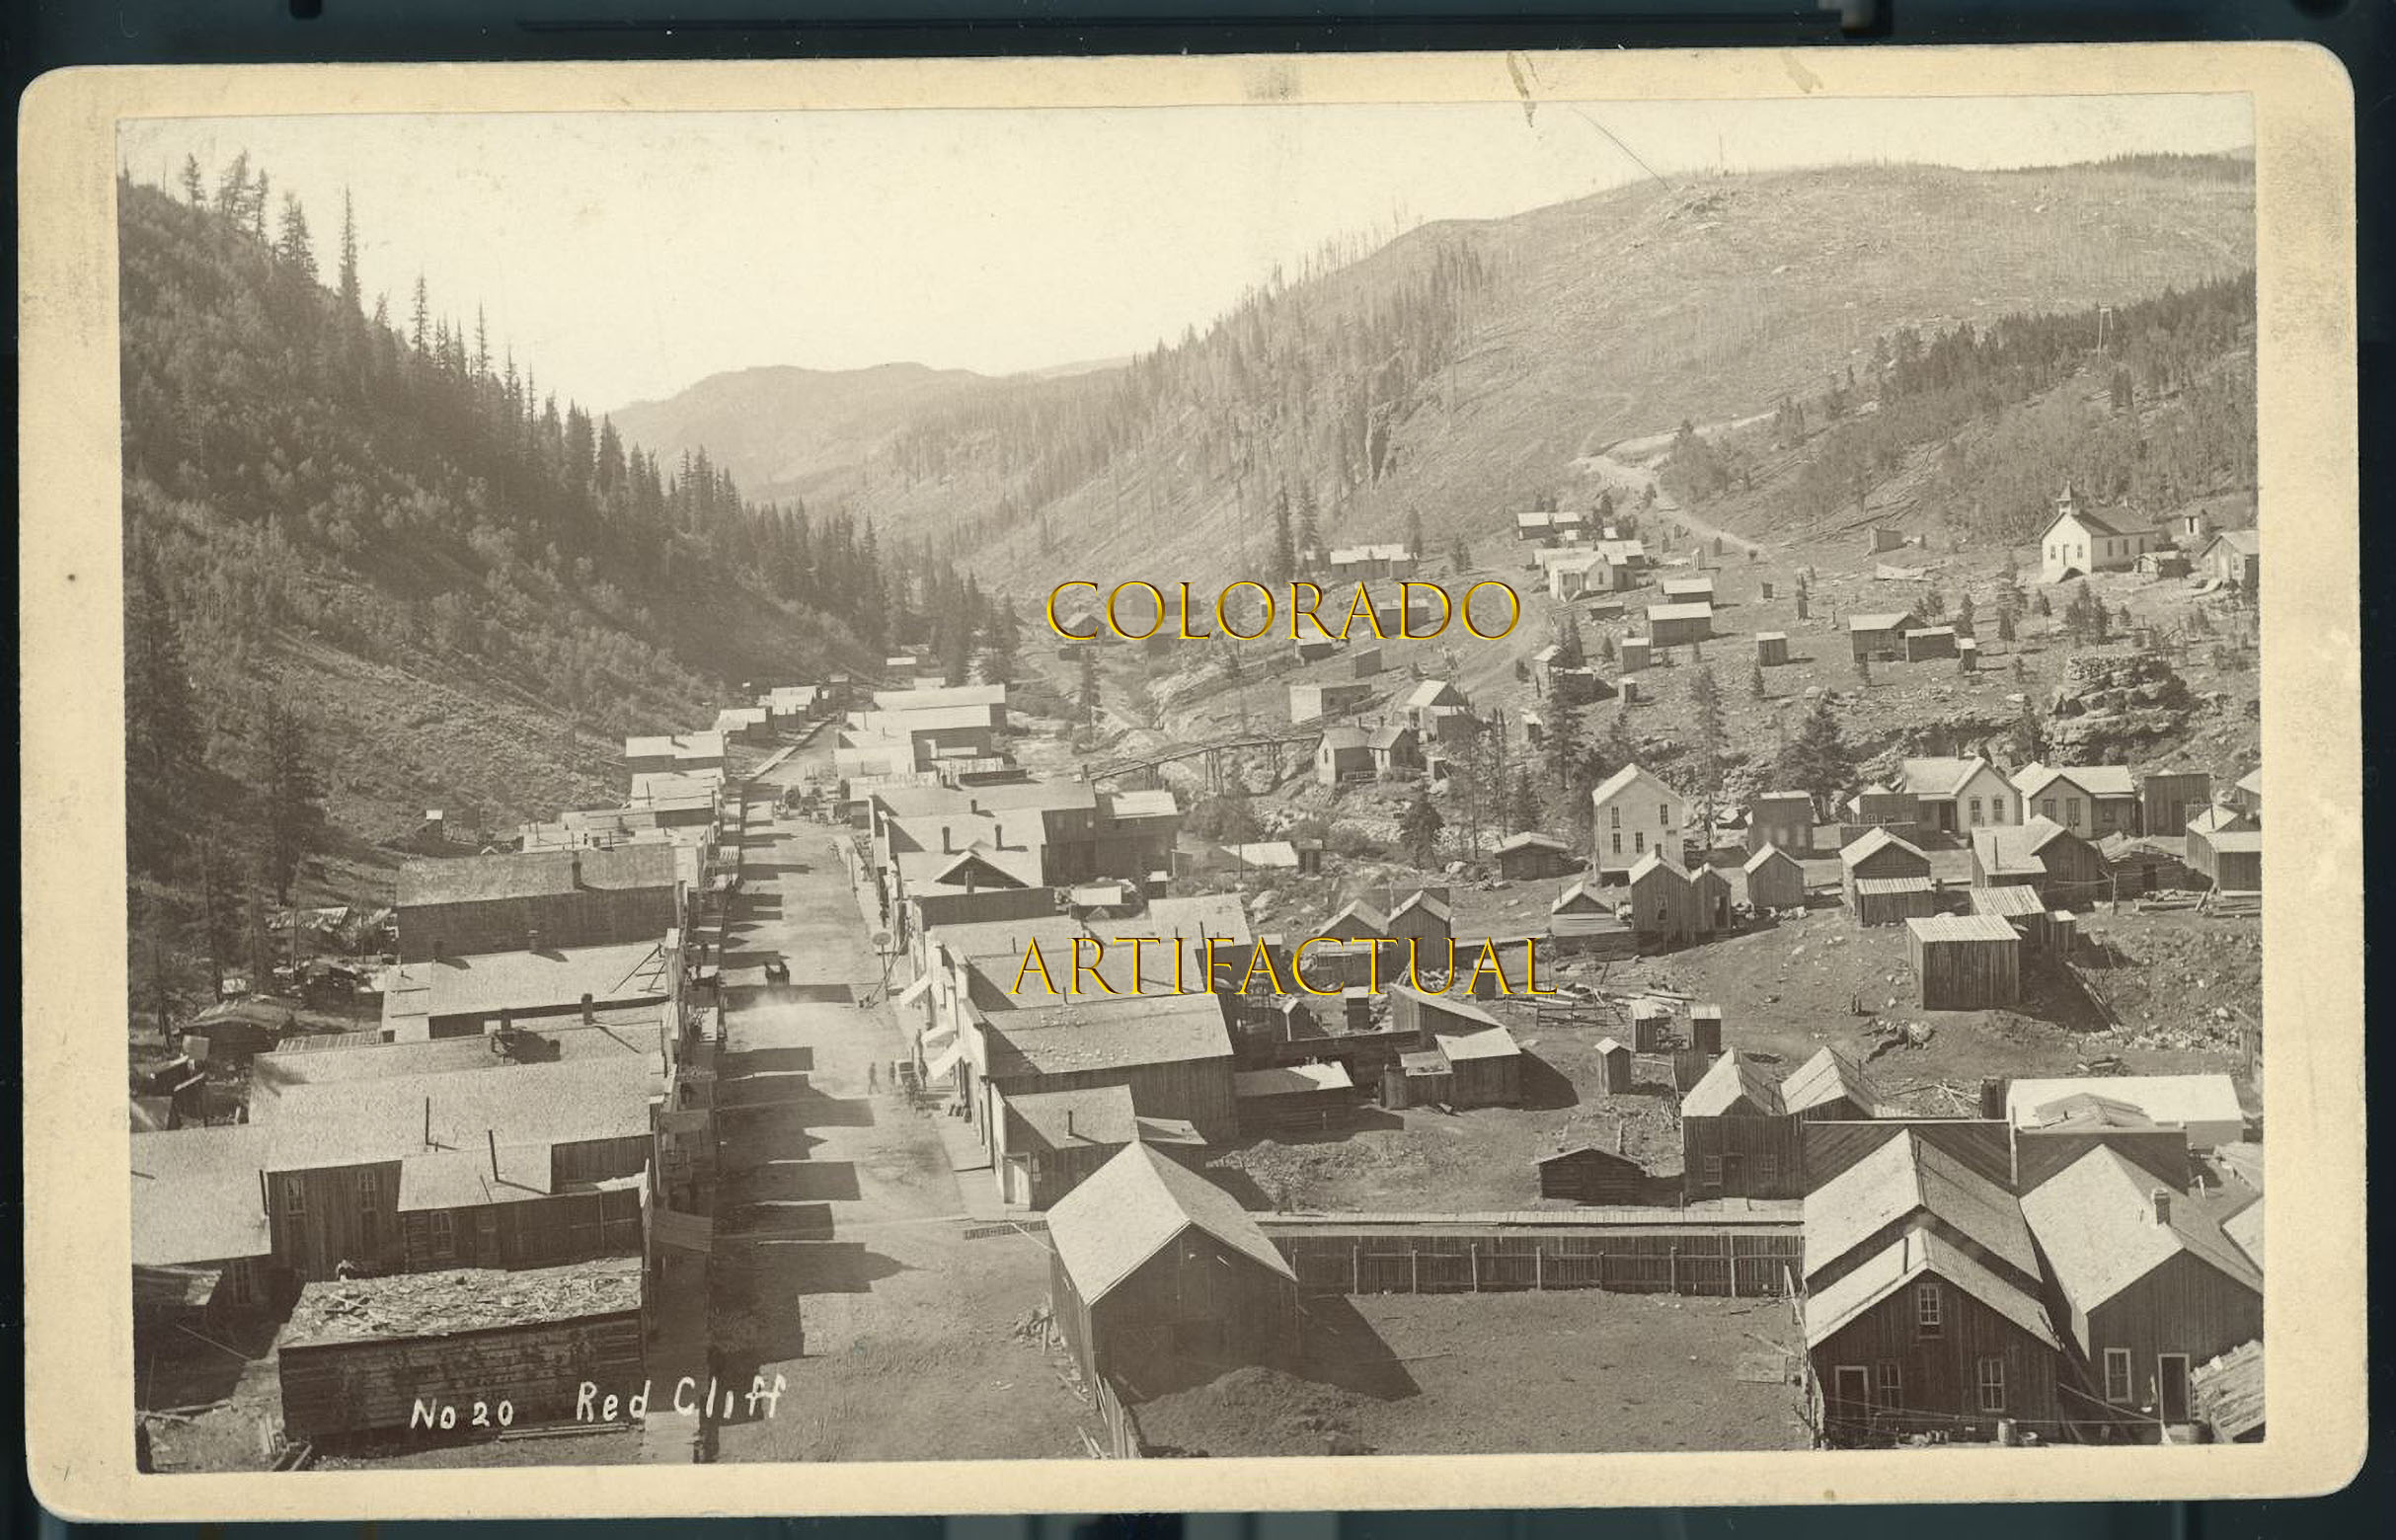 Red Cliff Eagle County Colorado antique C.W. Erdlen photograph 1880